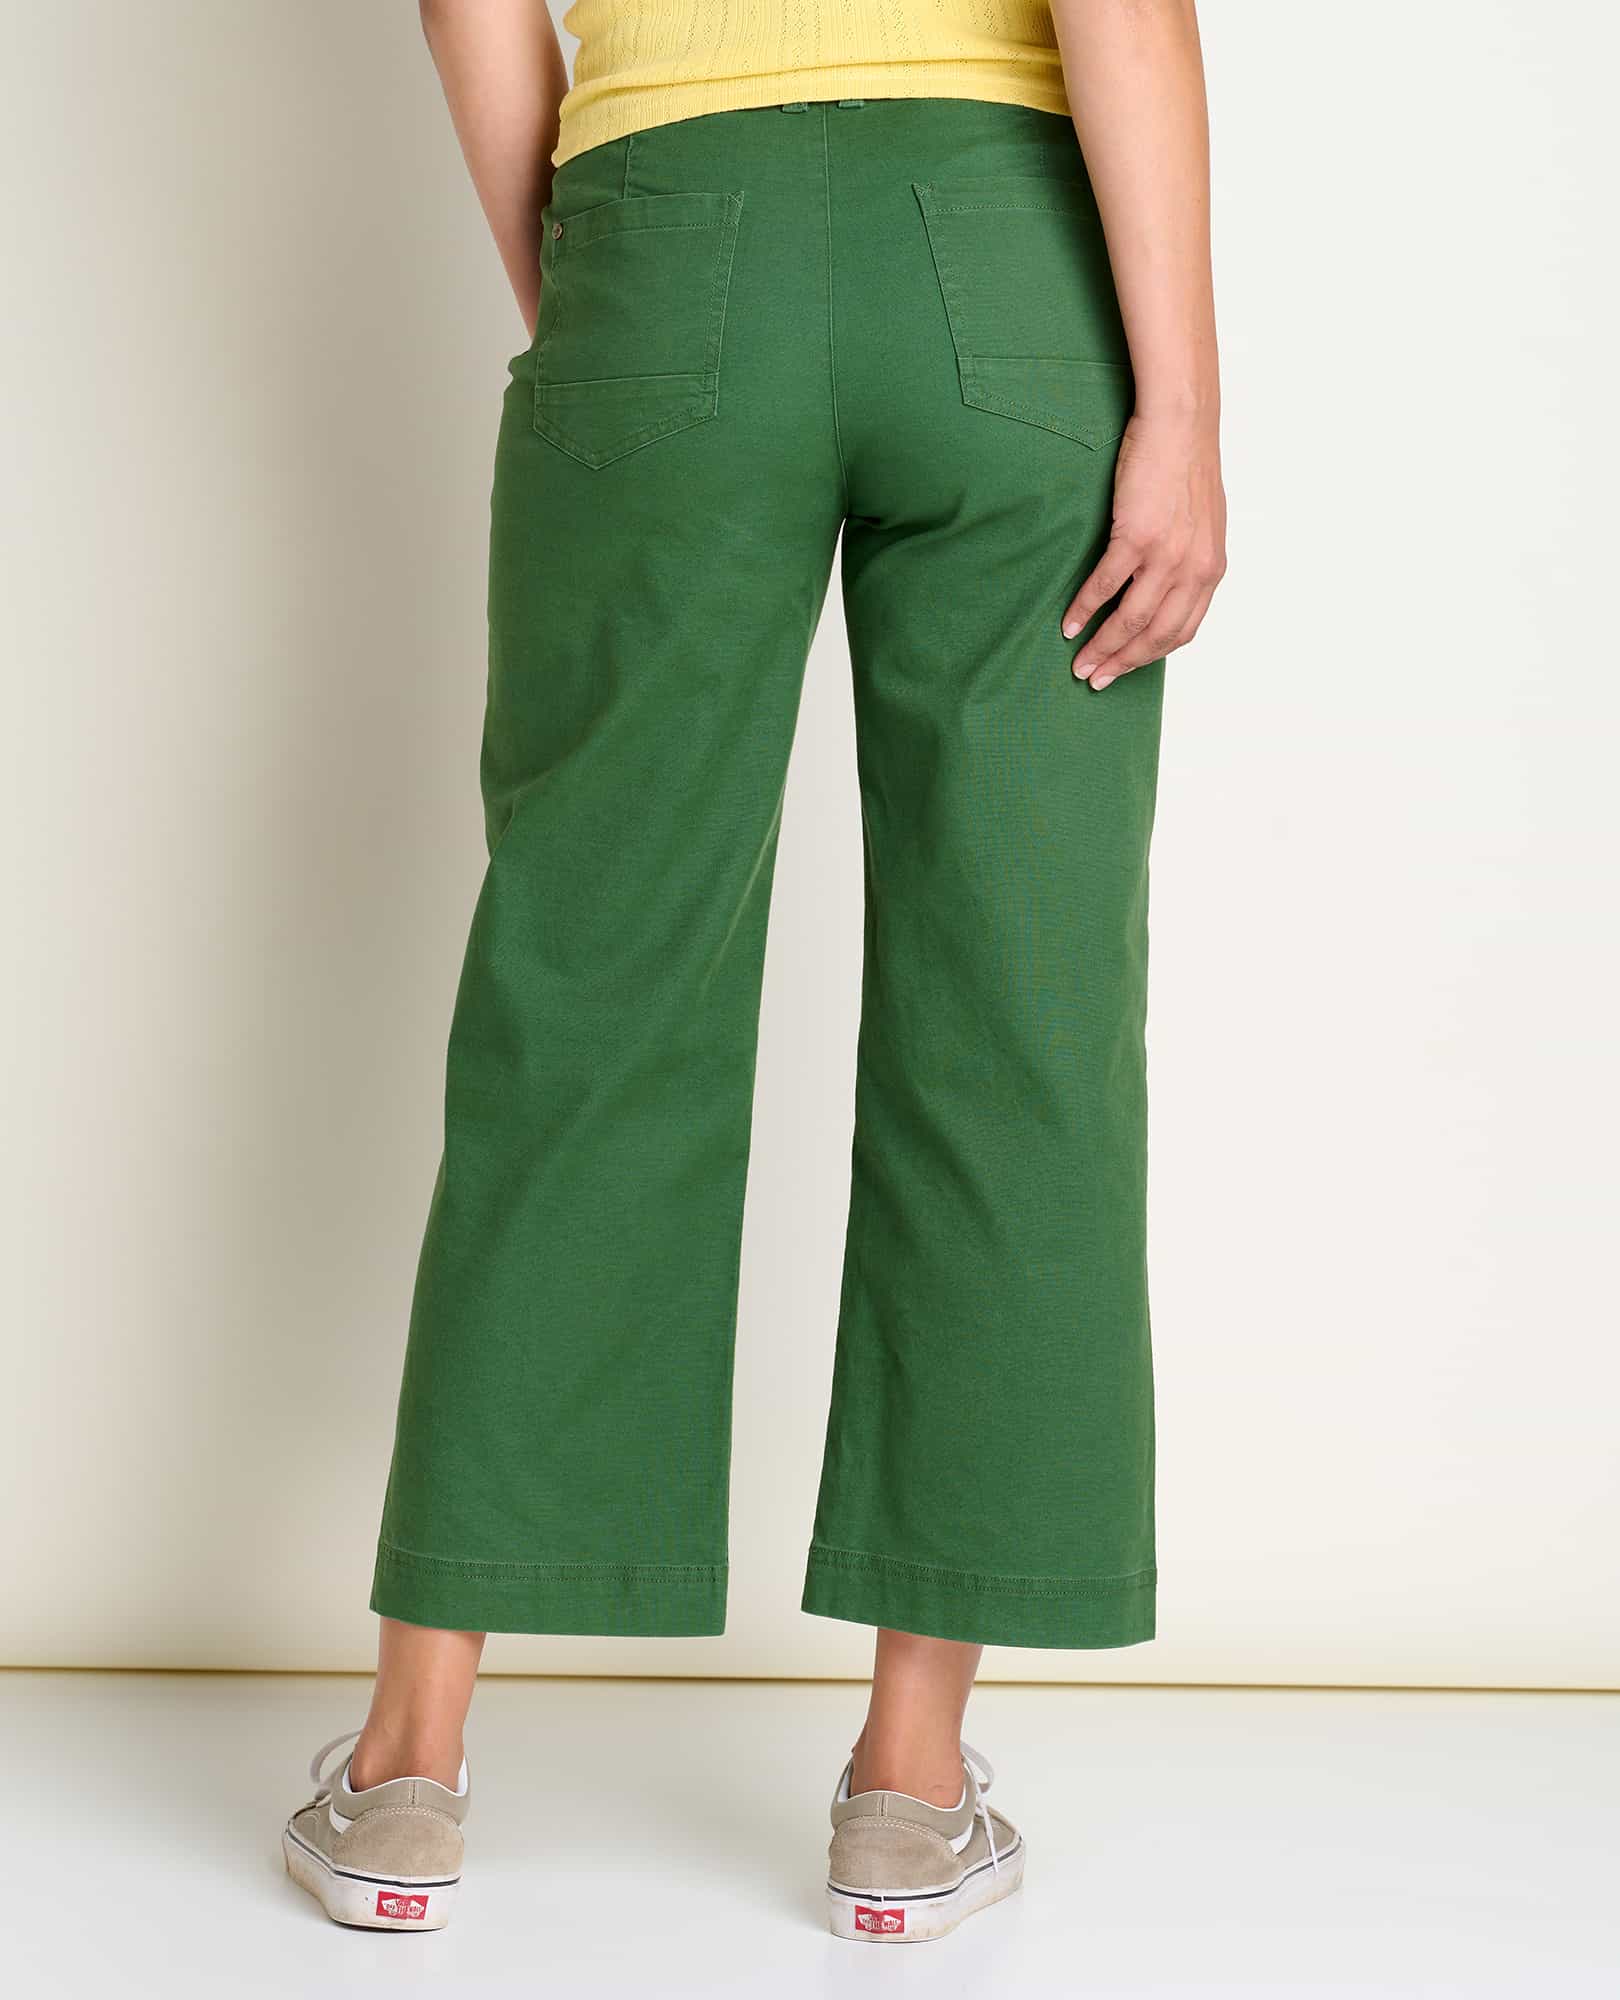 Nobody Rocks Bright Green Palazzo Pants Like Kate Moss Can | Fashion  outfits, Stylish outfits, Bright green dress